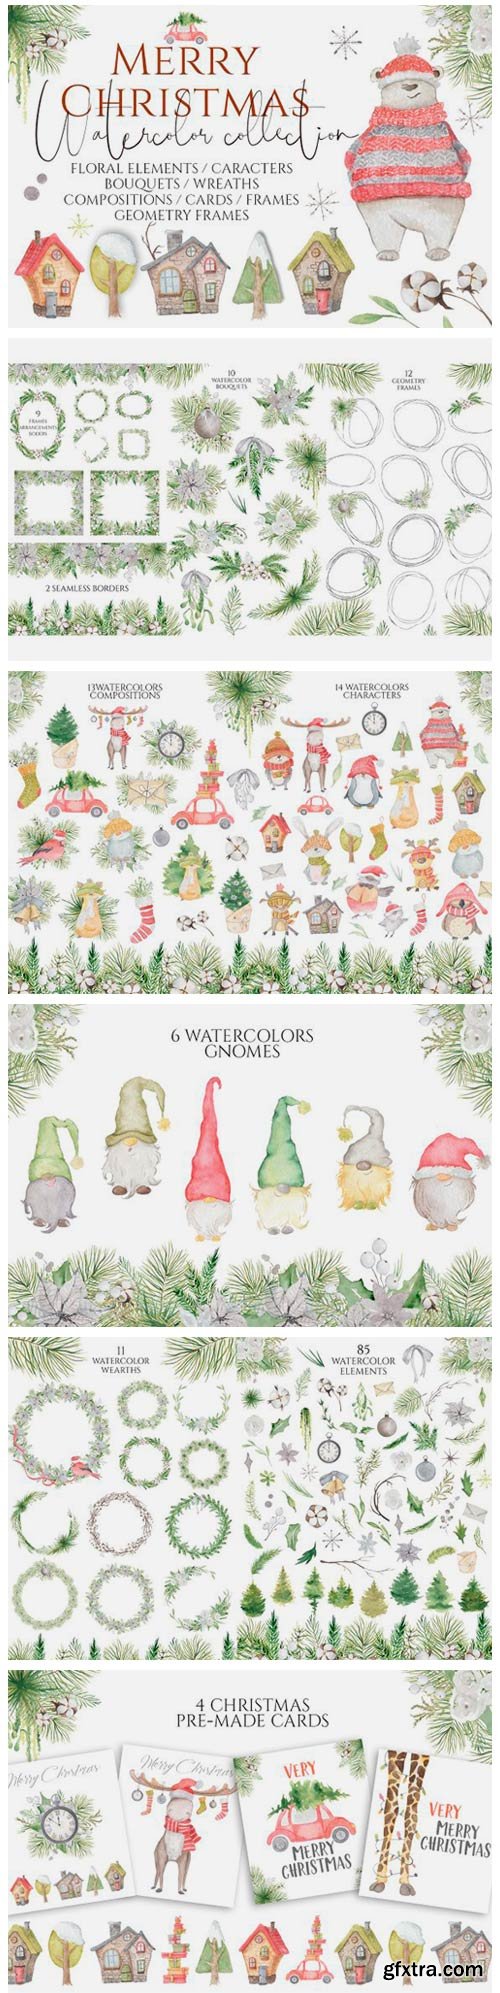 Christmas Watercolor Characters 4869588